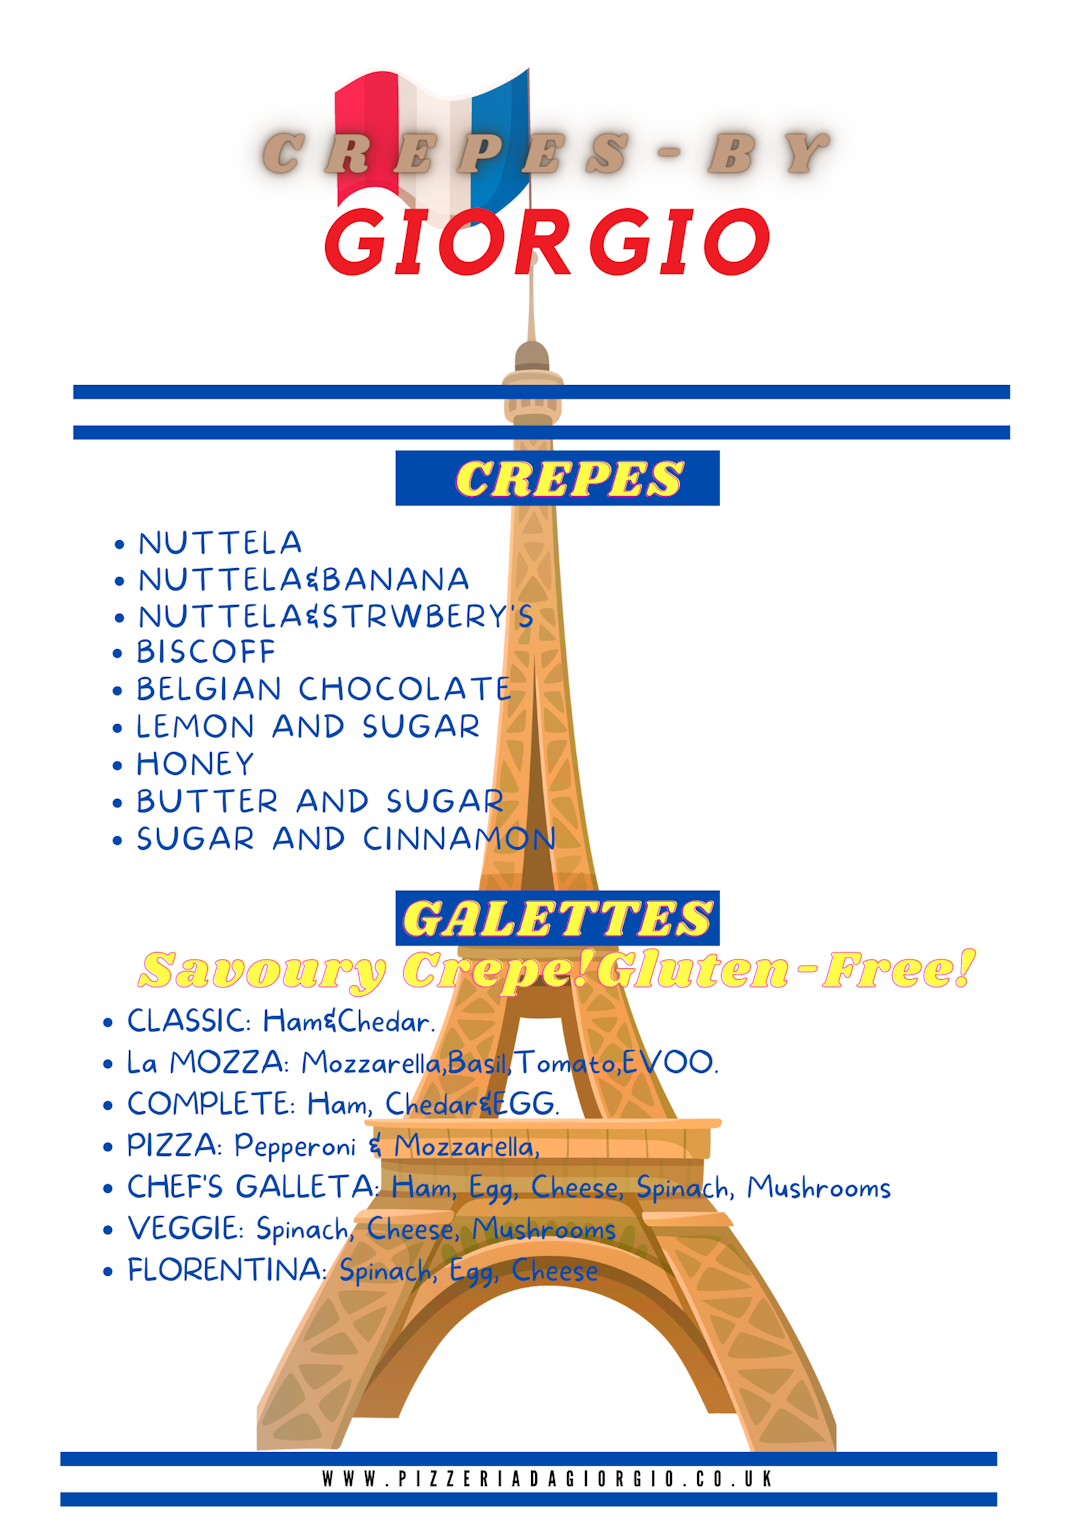 Hero image for supplier Pizzeria Da Giorgio!